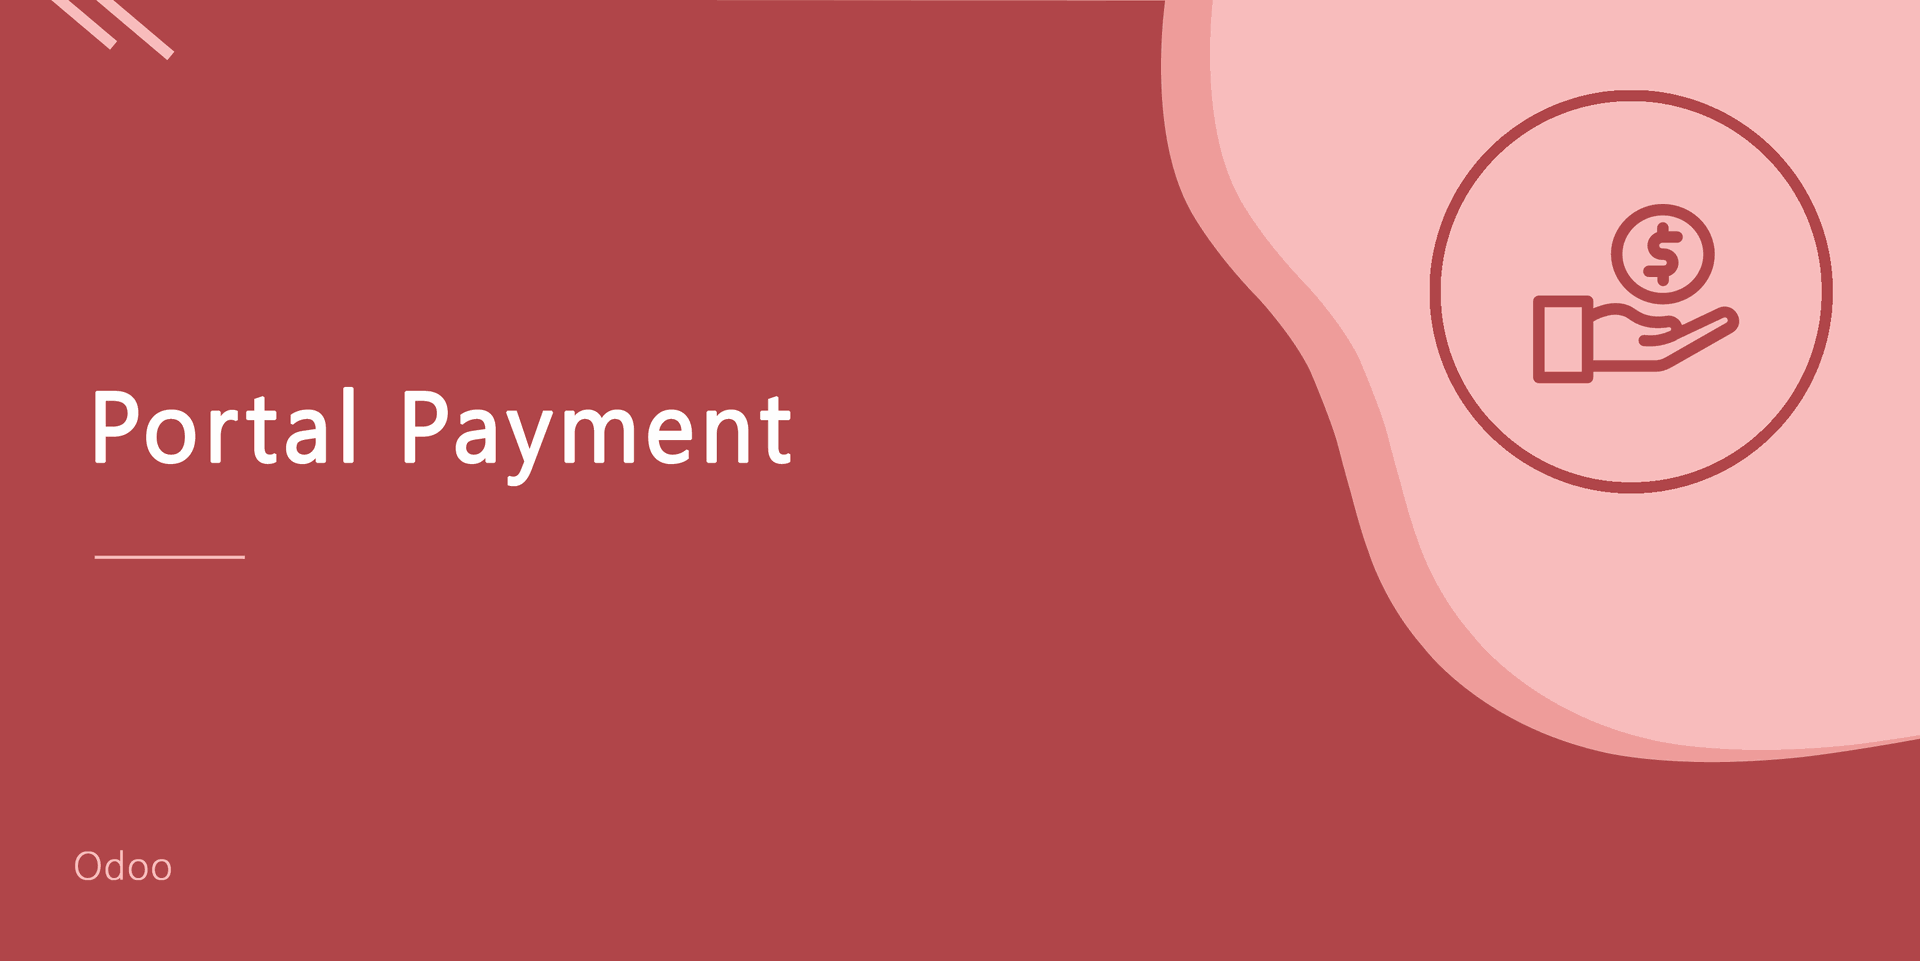 Portal Payment
